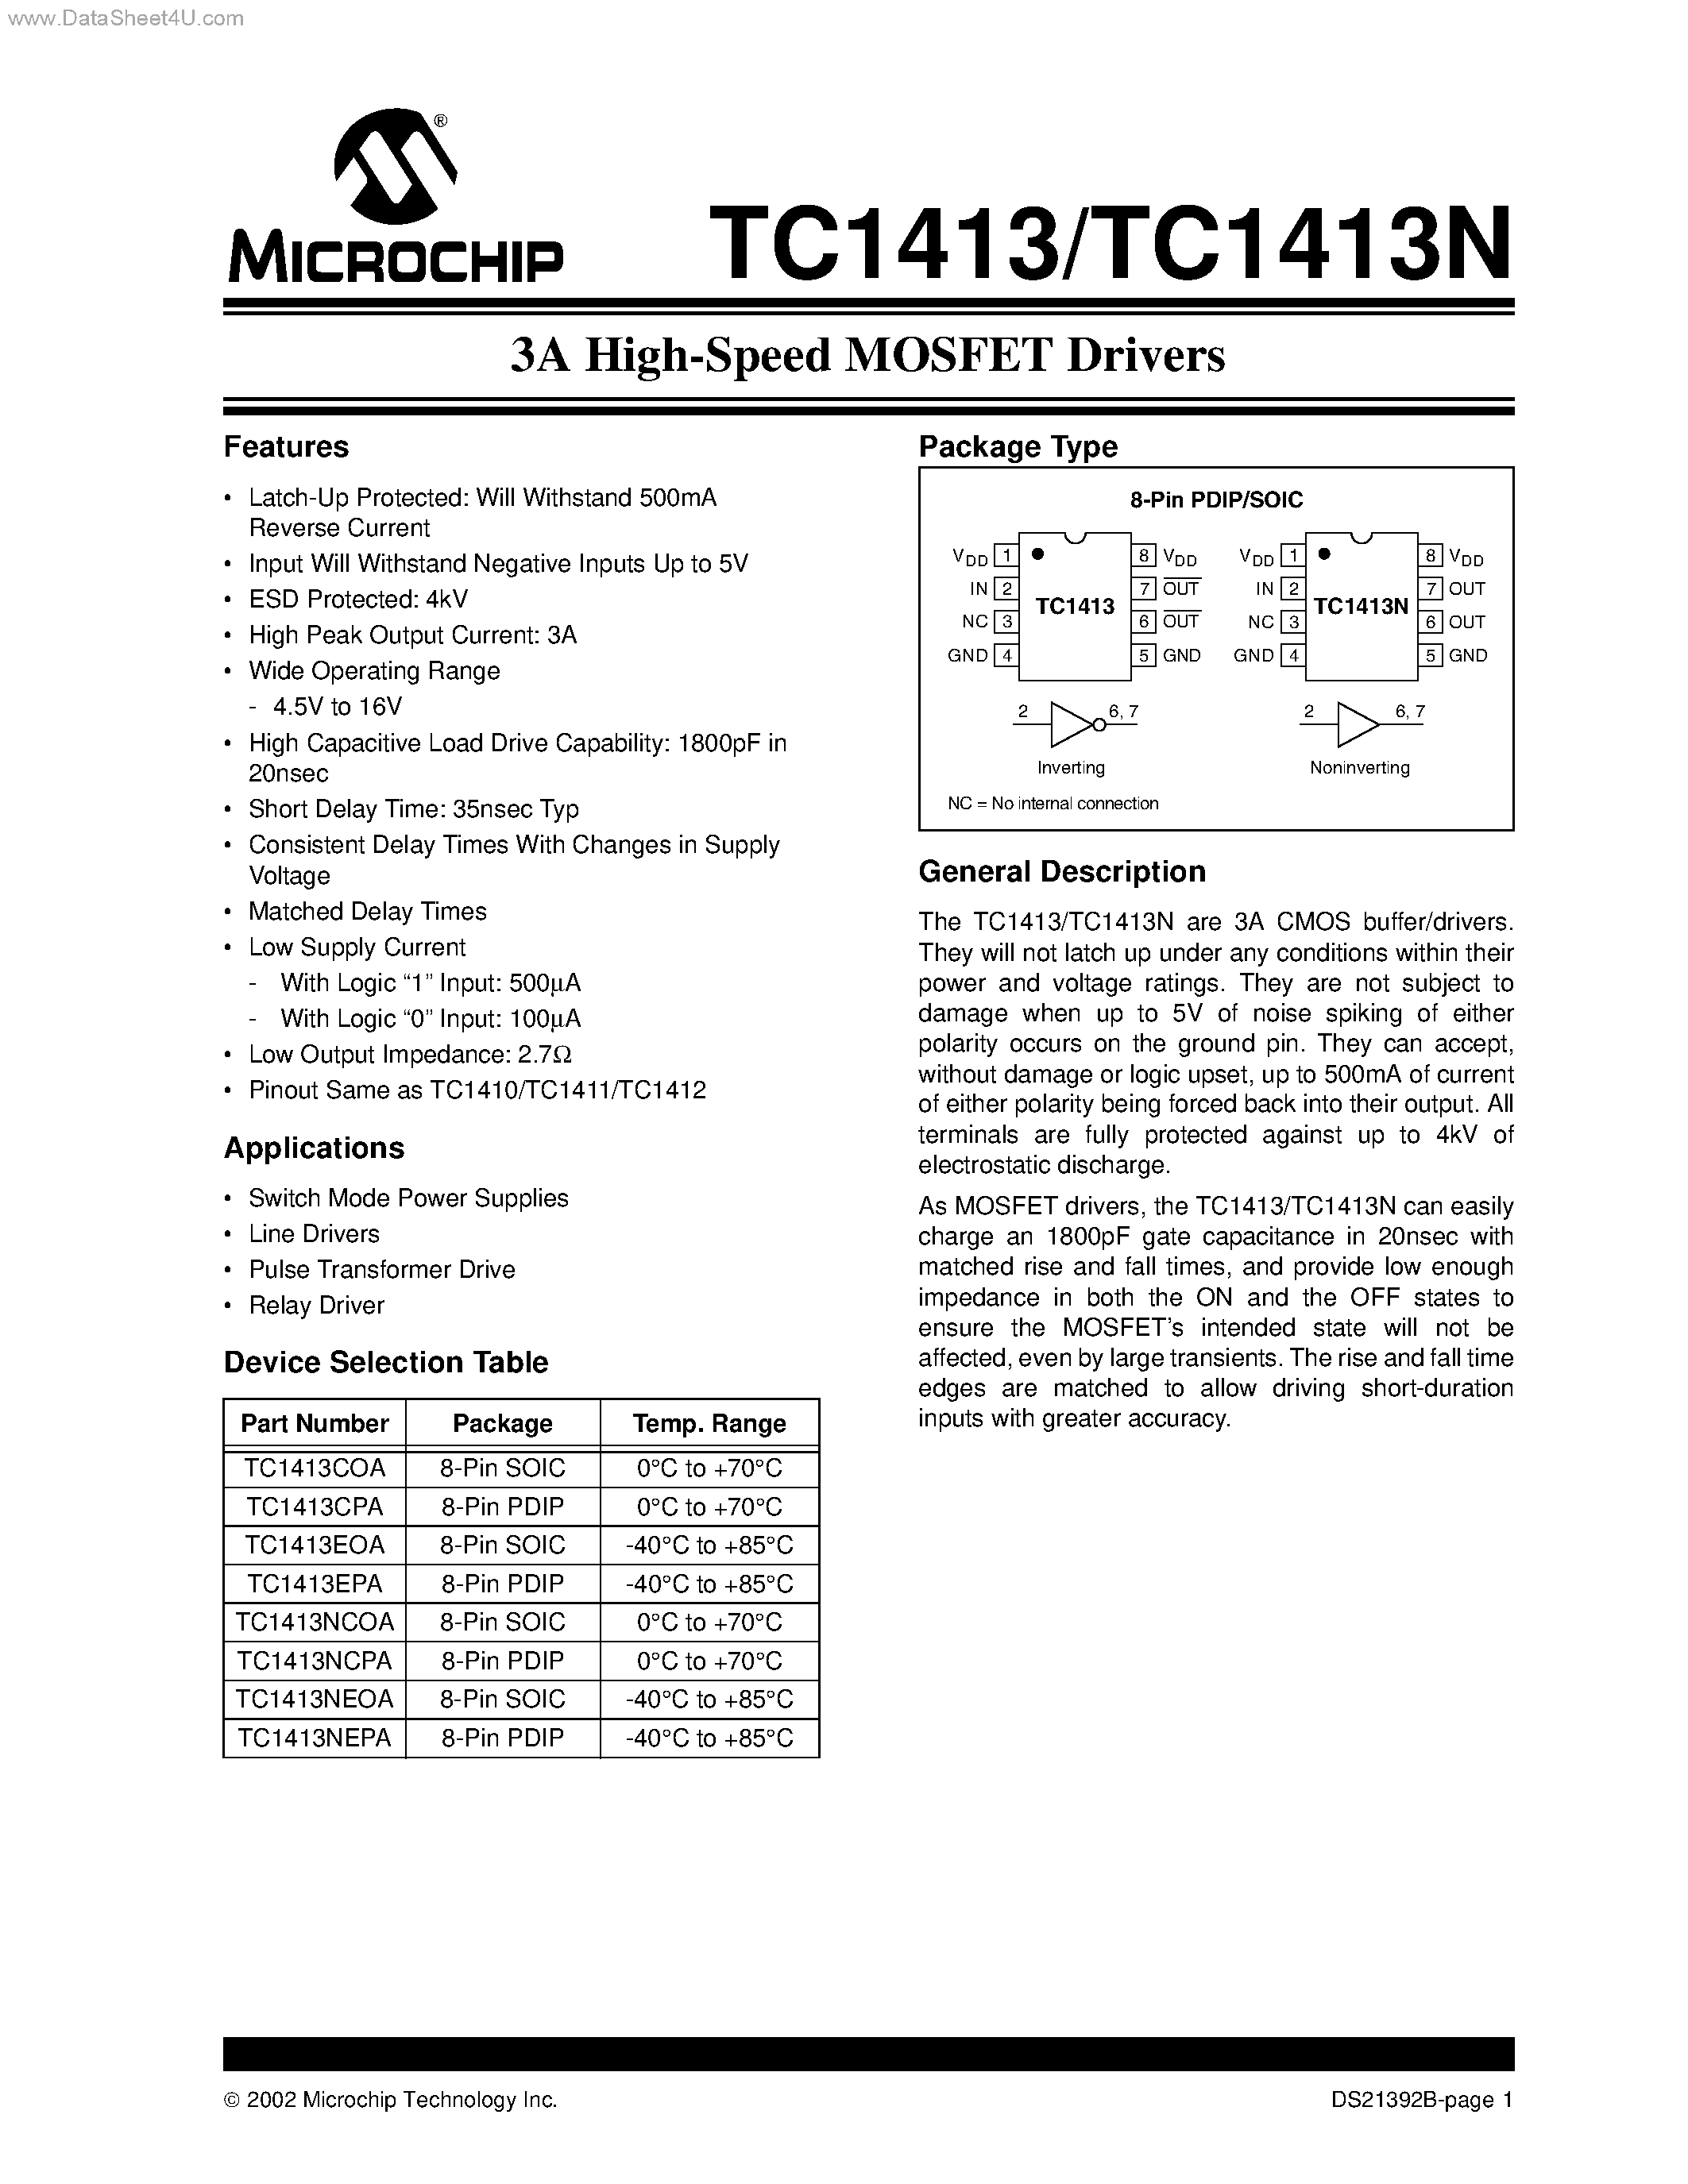 Даташит TC1413 - High-Speed MOSFET Drivers страница 1